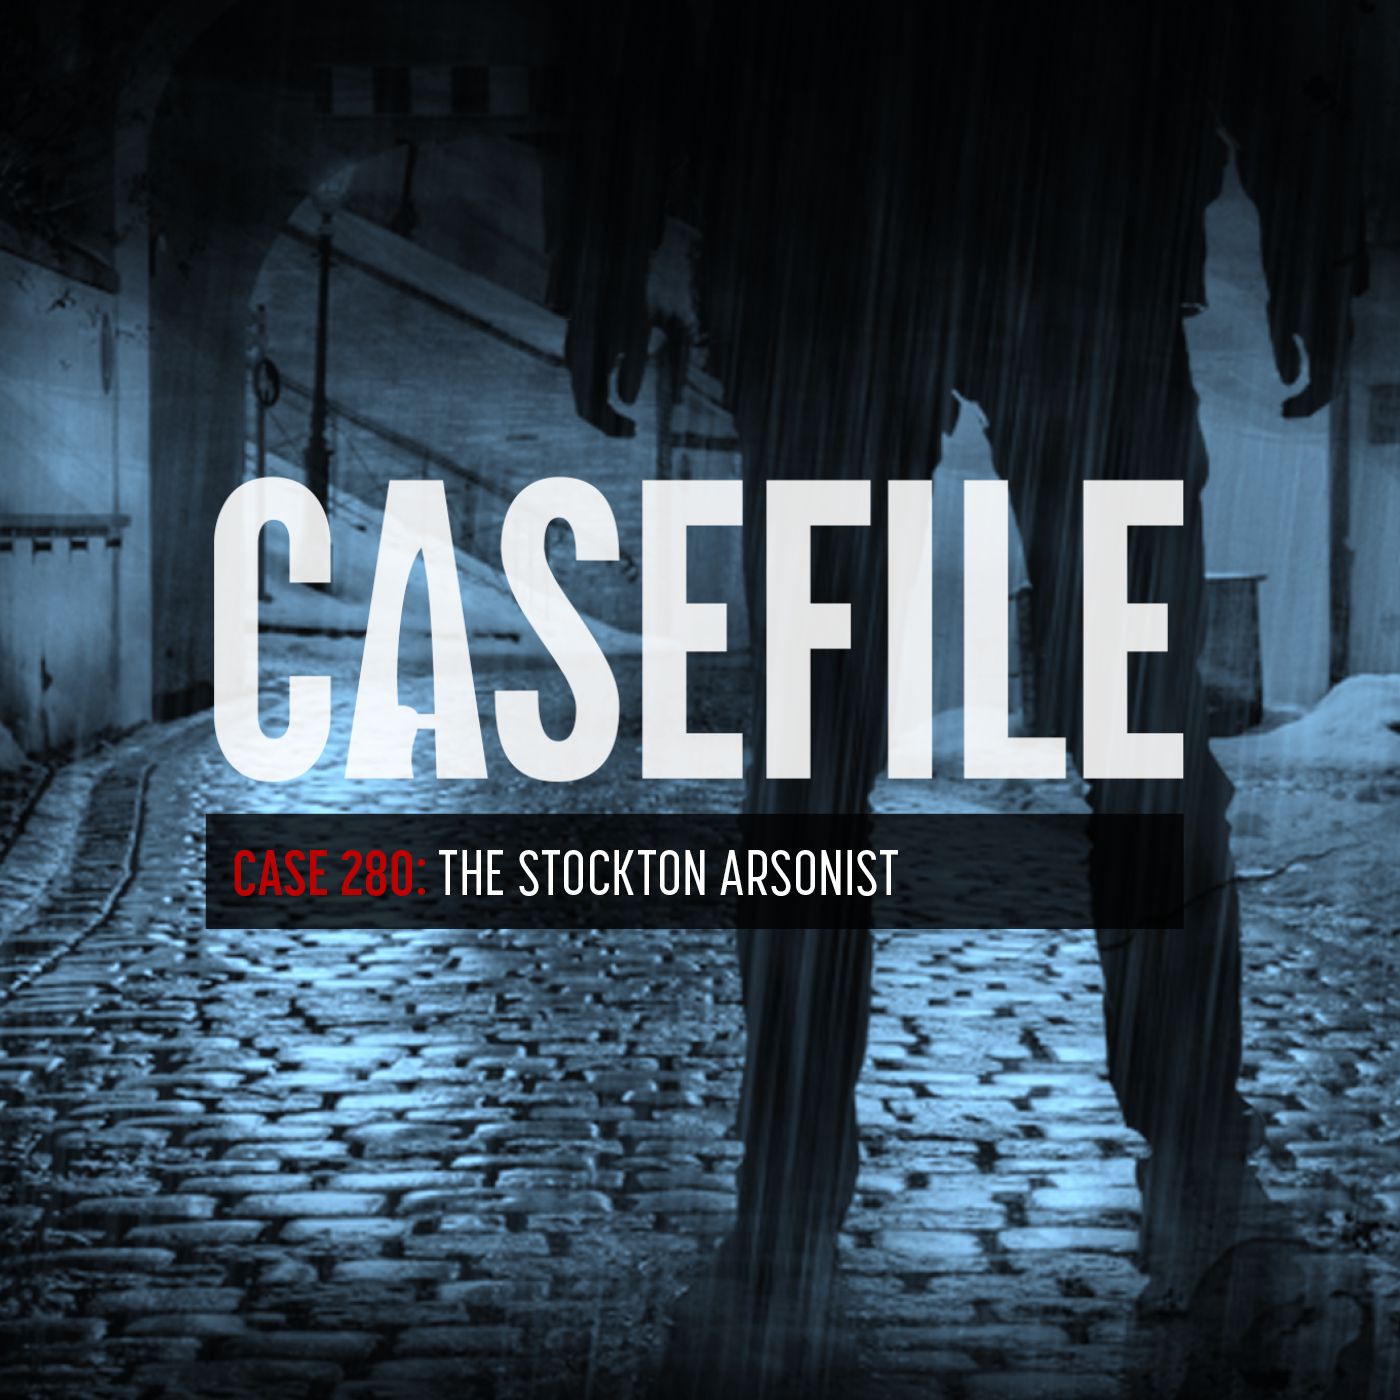 Case 280: The Stockton Arsonist